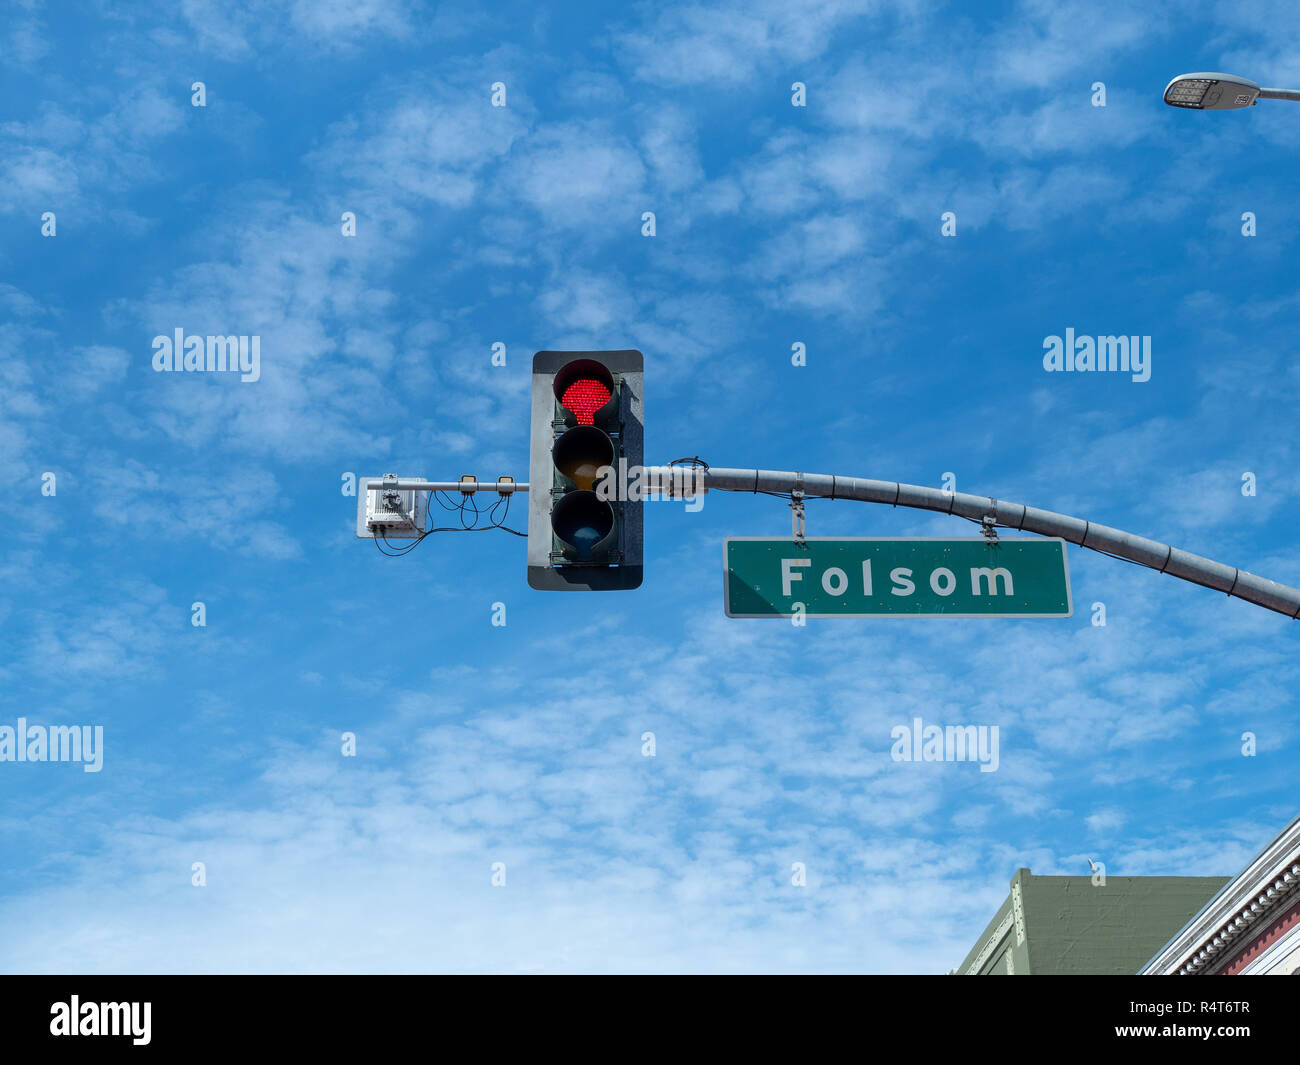 Red light district traffic light on Folsom St in San Francisco at Folsom Street Fair Stock Photo